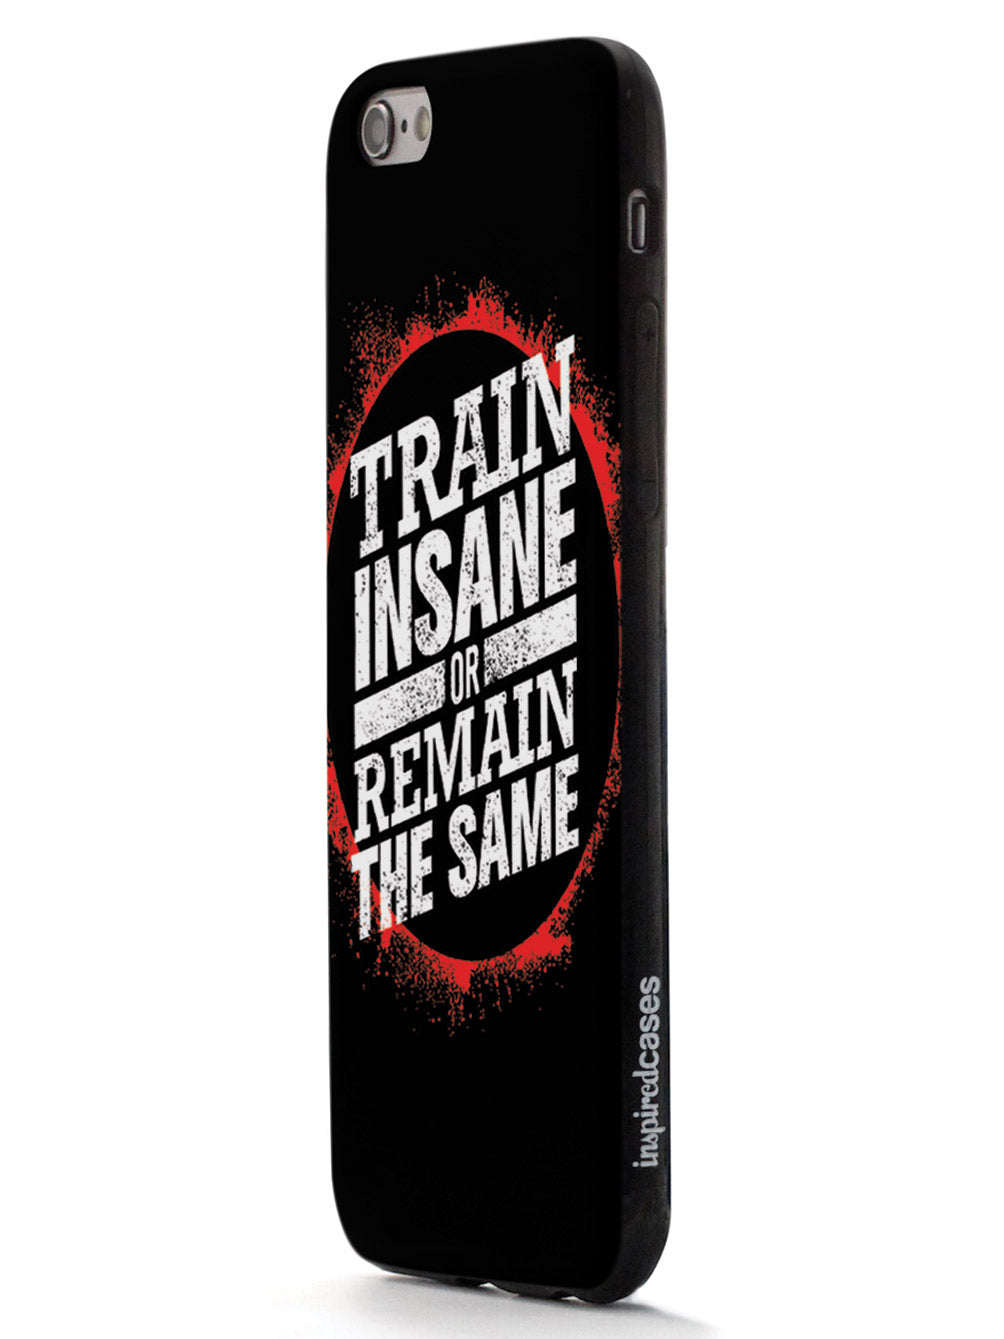 Train Insane or Remain the Same - Black Case